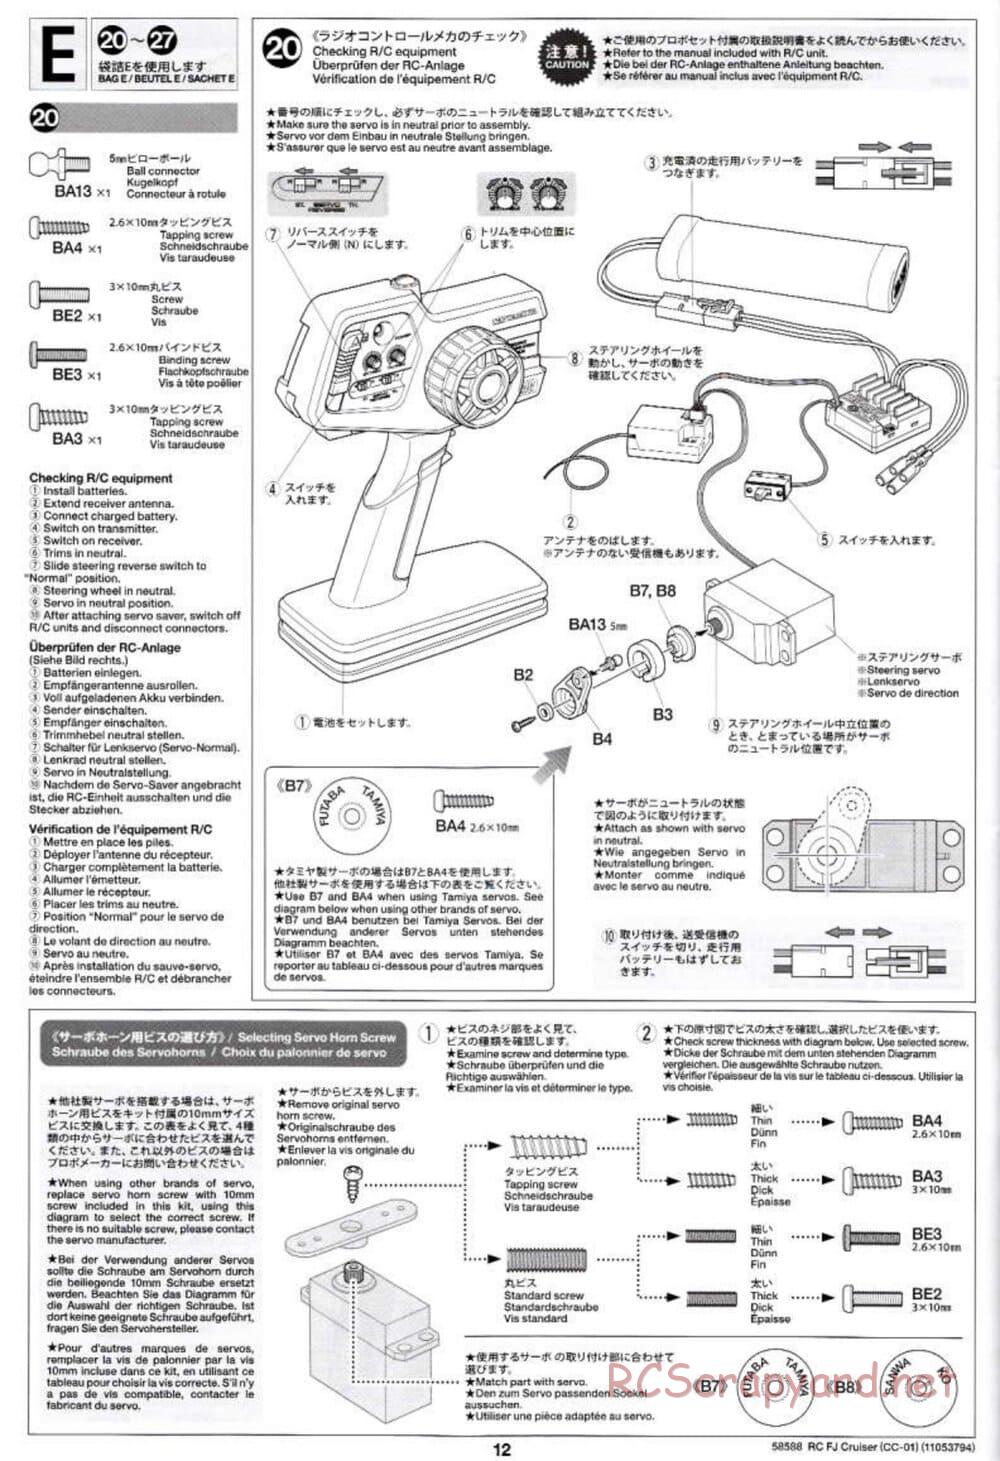 Tamiya - Toyota FJ Cruiser - CC-01 Chassis - Manual - Page 12